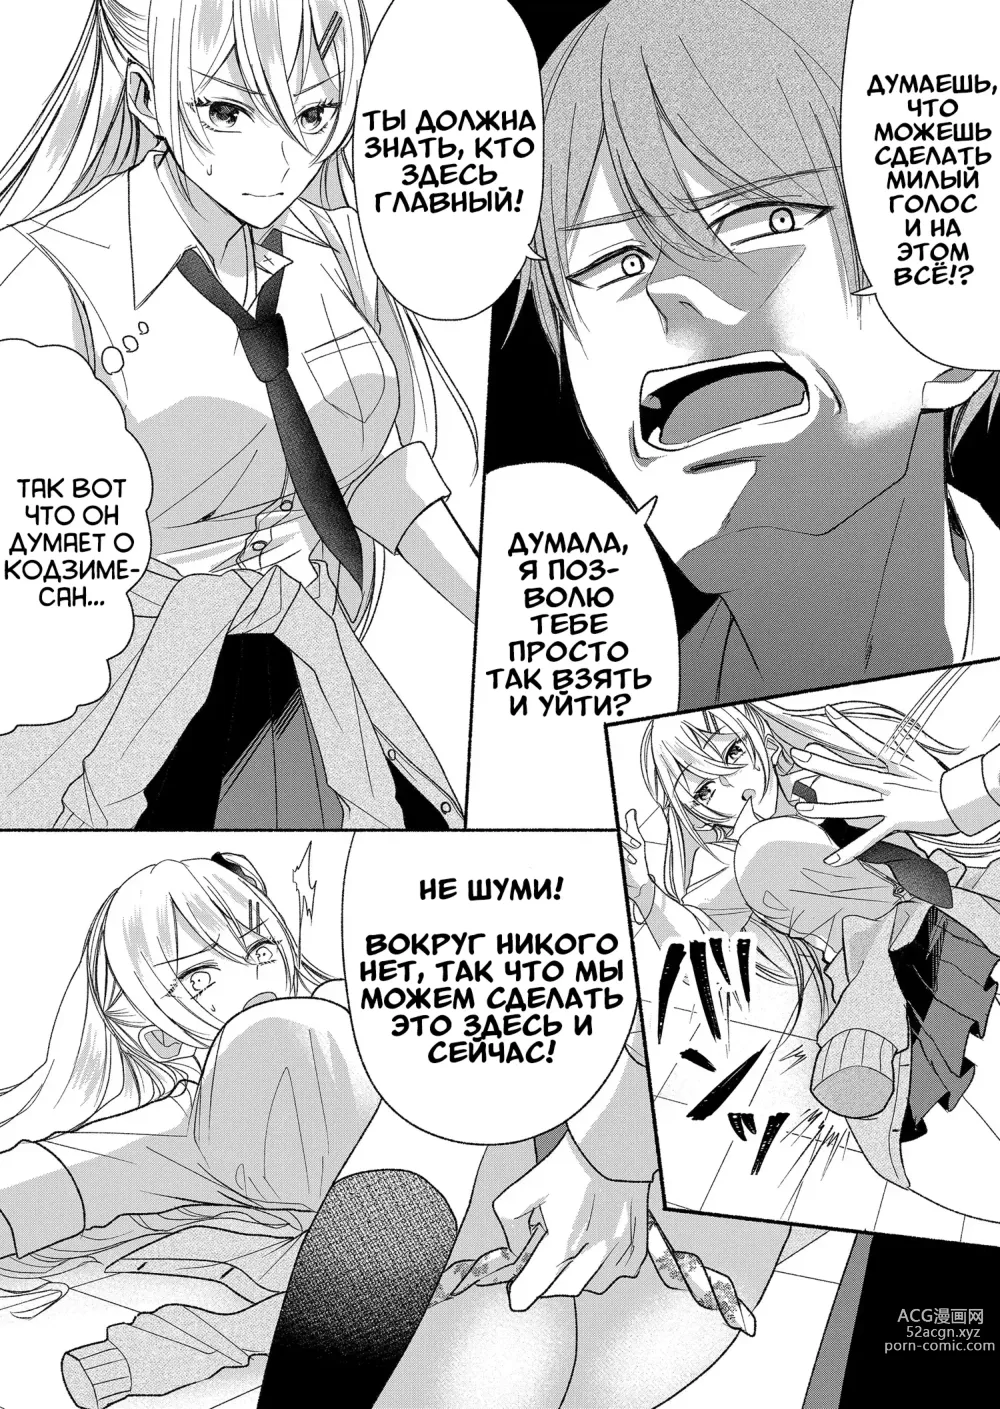 Page 9 of doujinshi Суккуб, который ненавидит мужчин 2